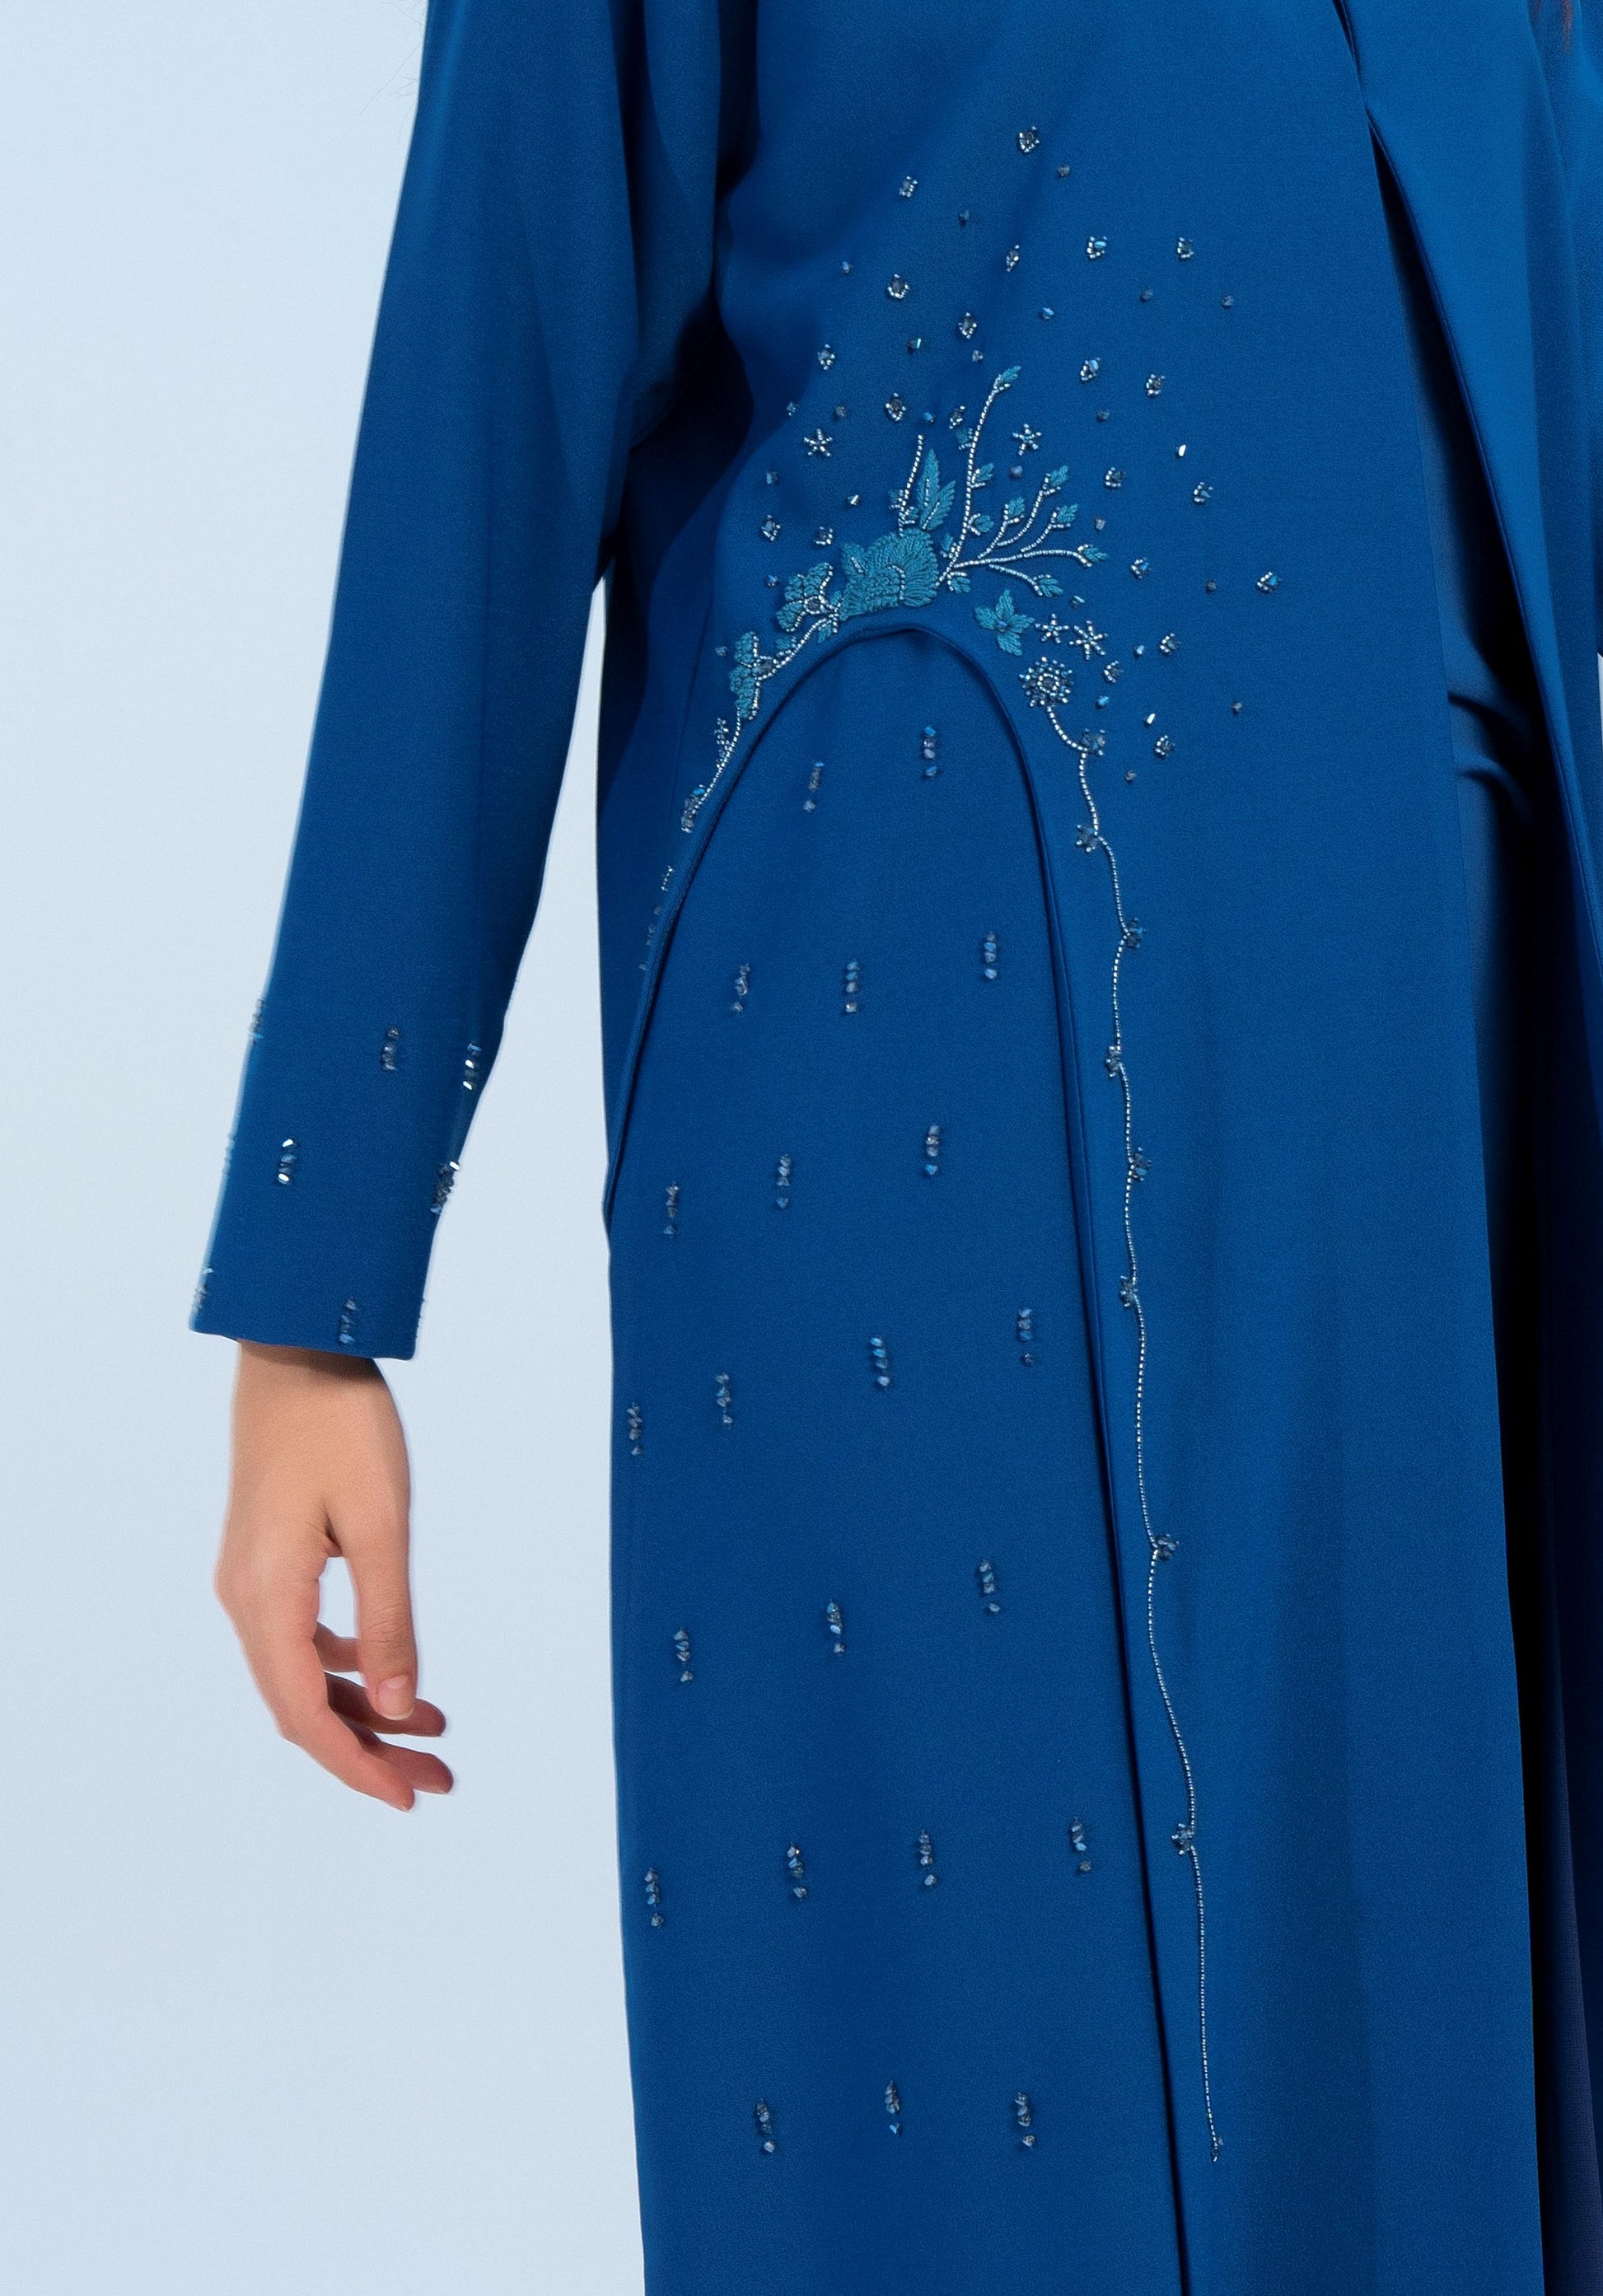 Side view of embellishments on sky blue abaya.